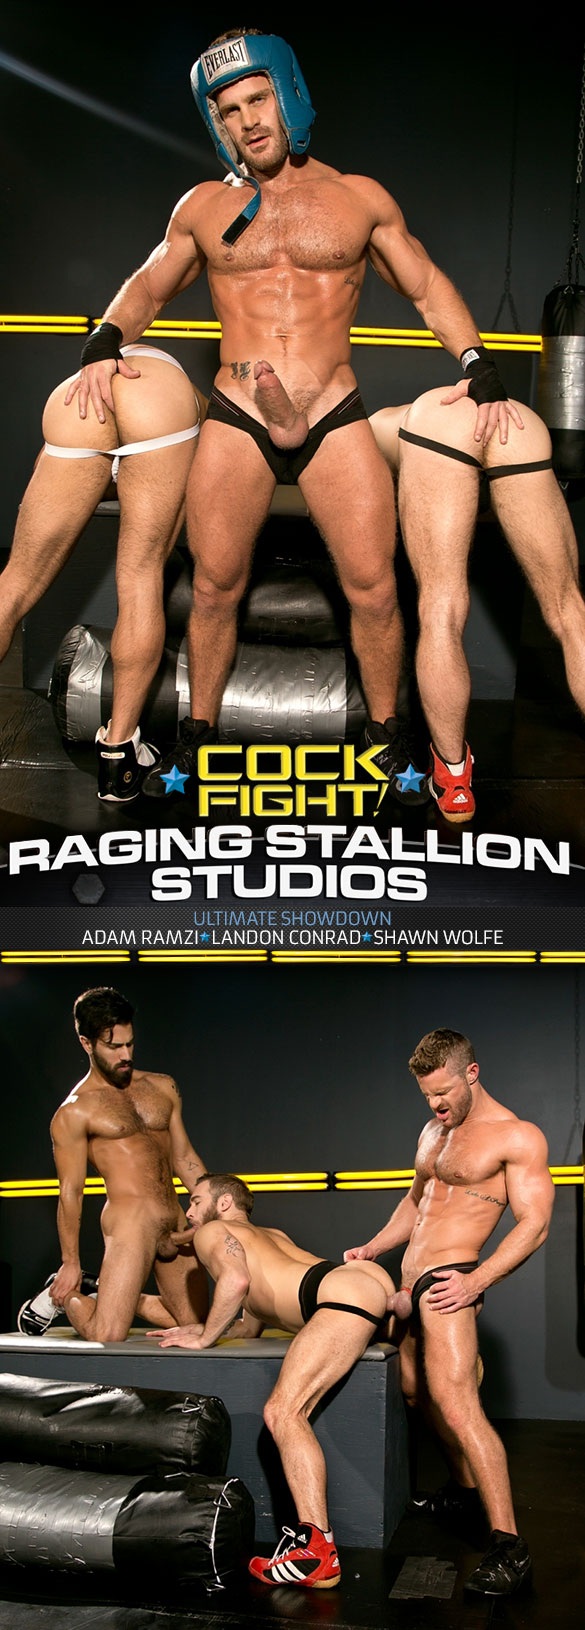 Raging Stallion: Shawn Wolfe, Adam Ramzi and Landon Conrad in “Cock Fight!”